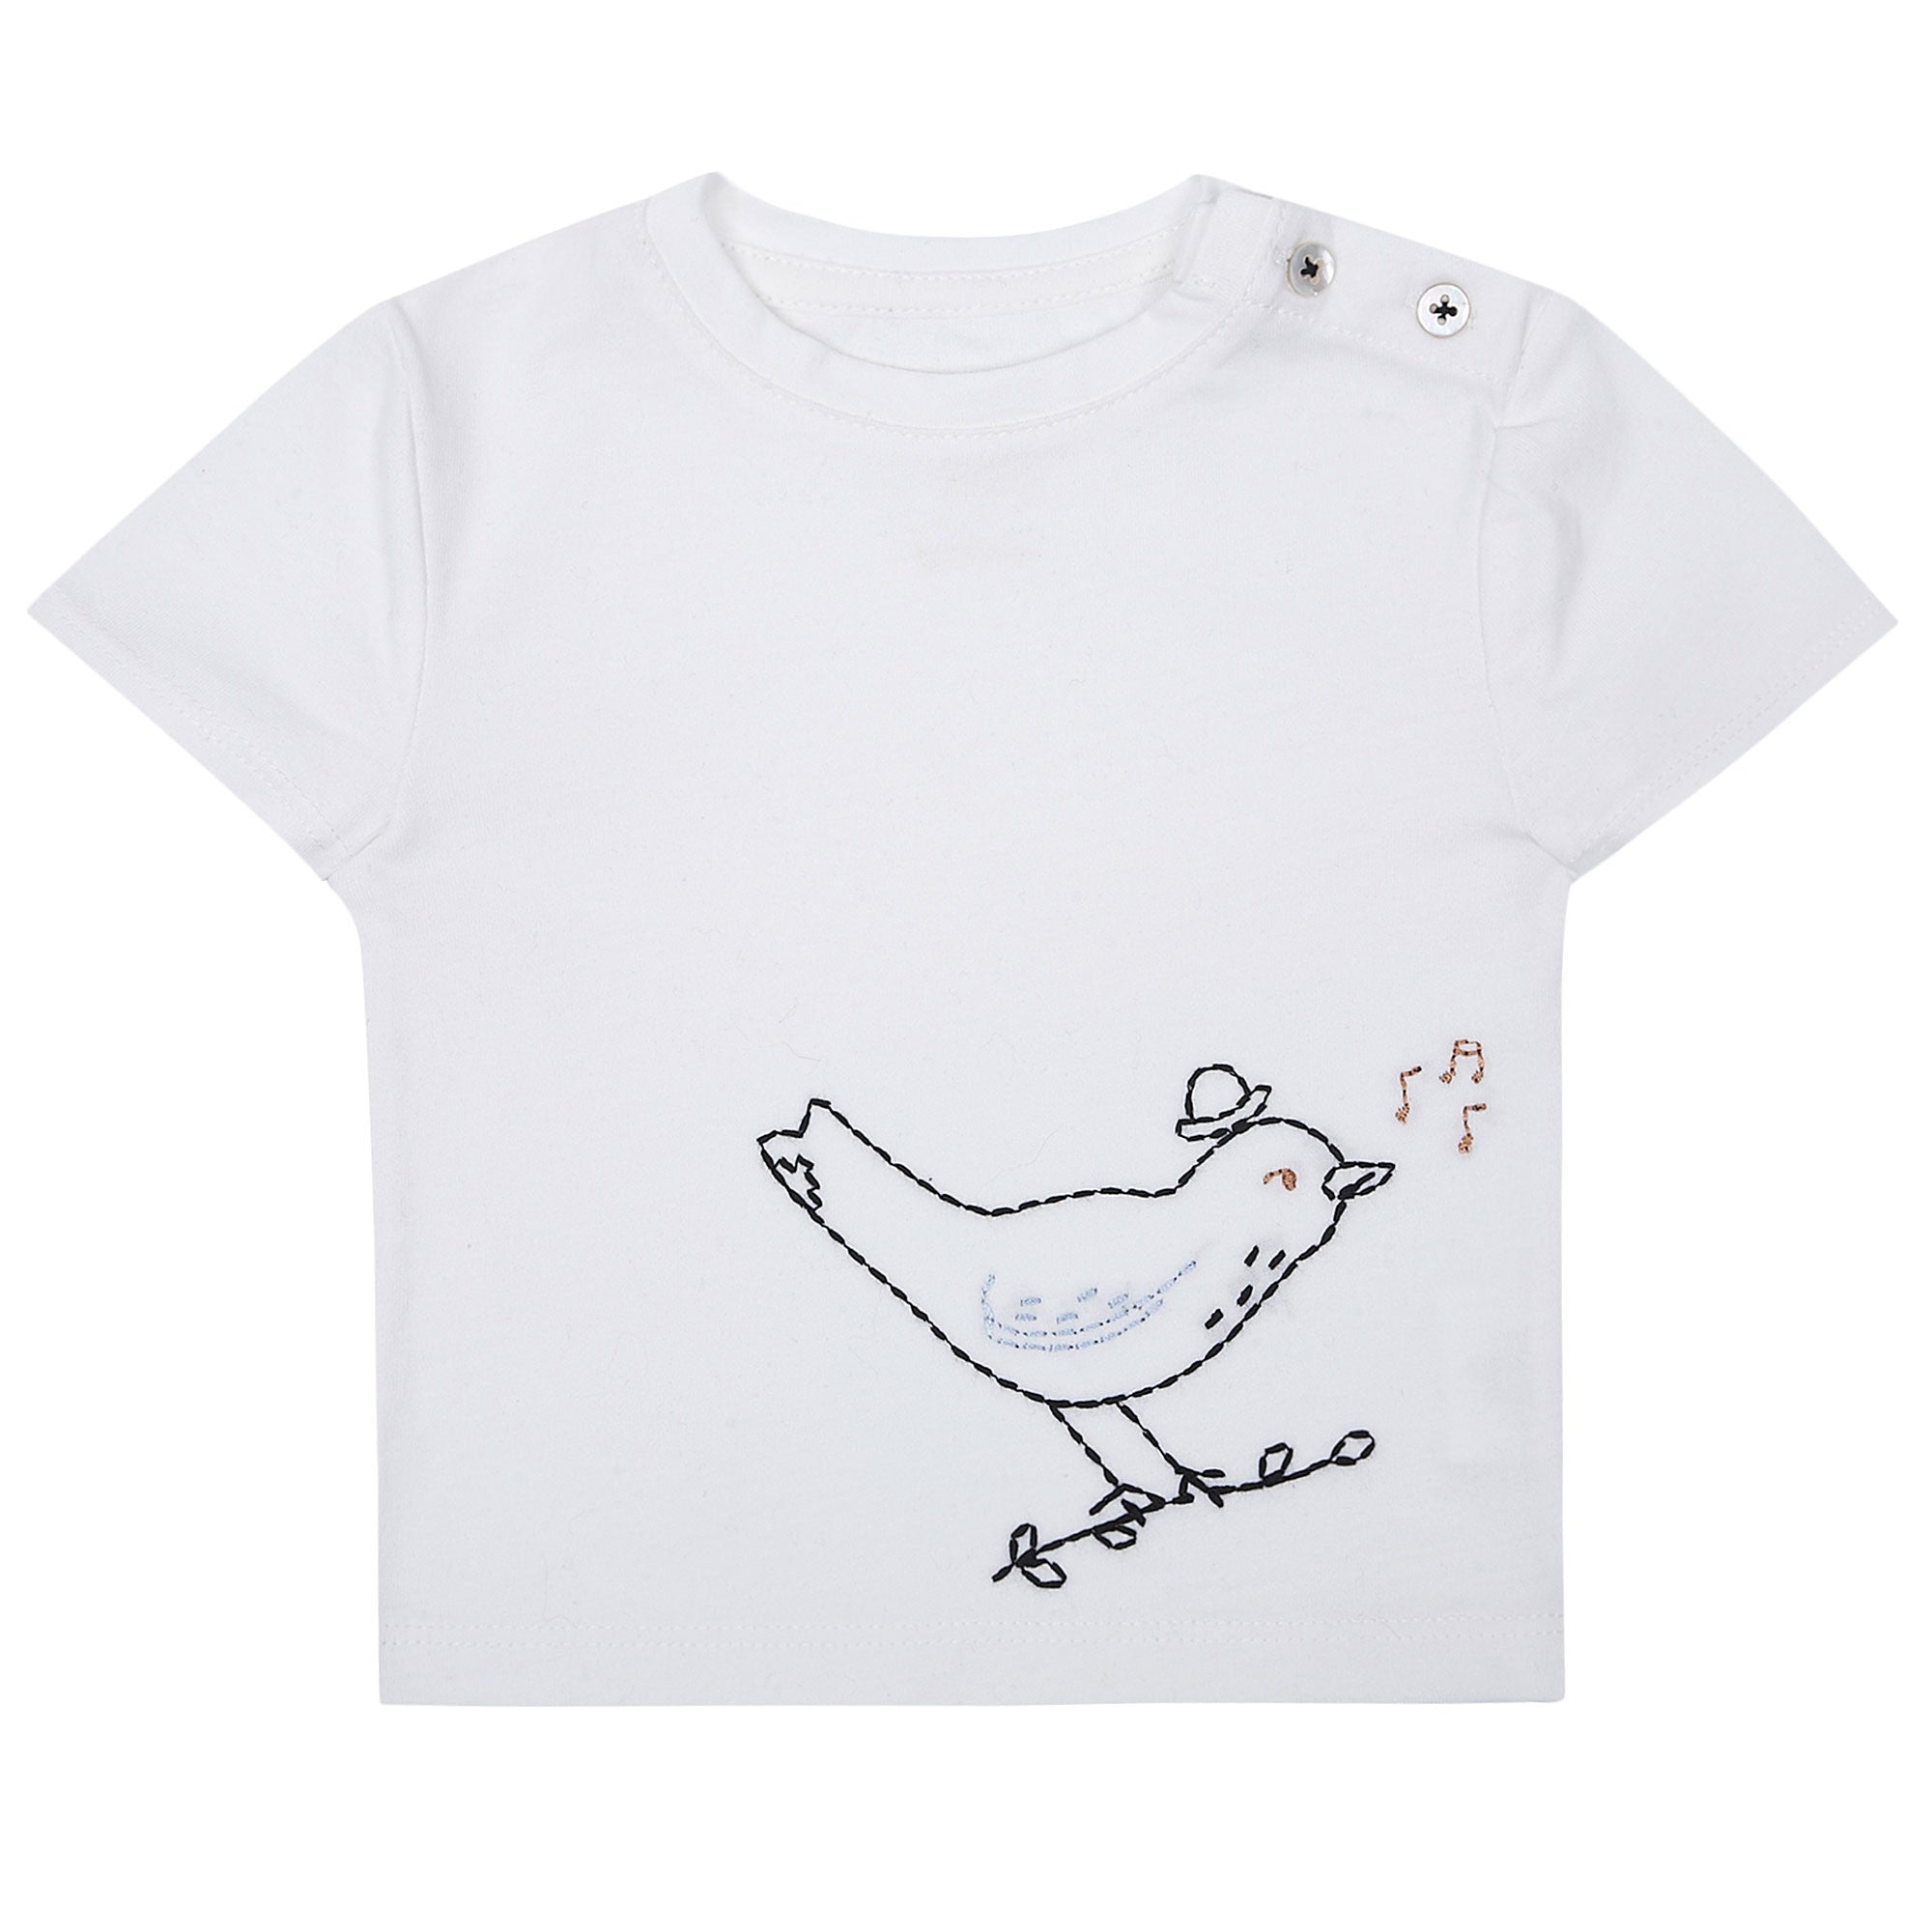 Baby Girls White Cotton T-shirt With Bird